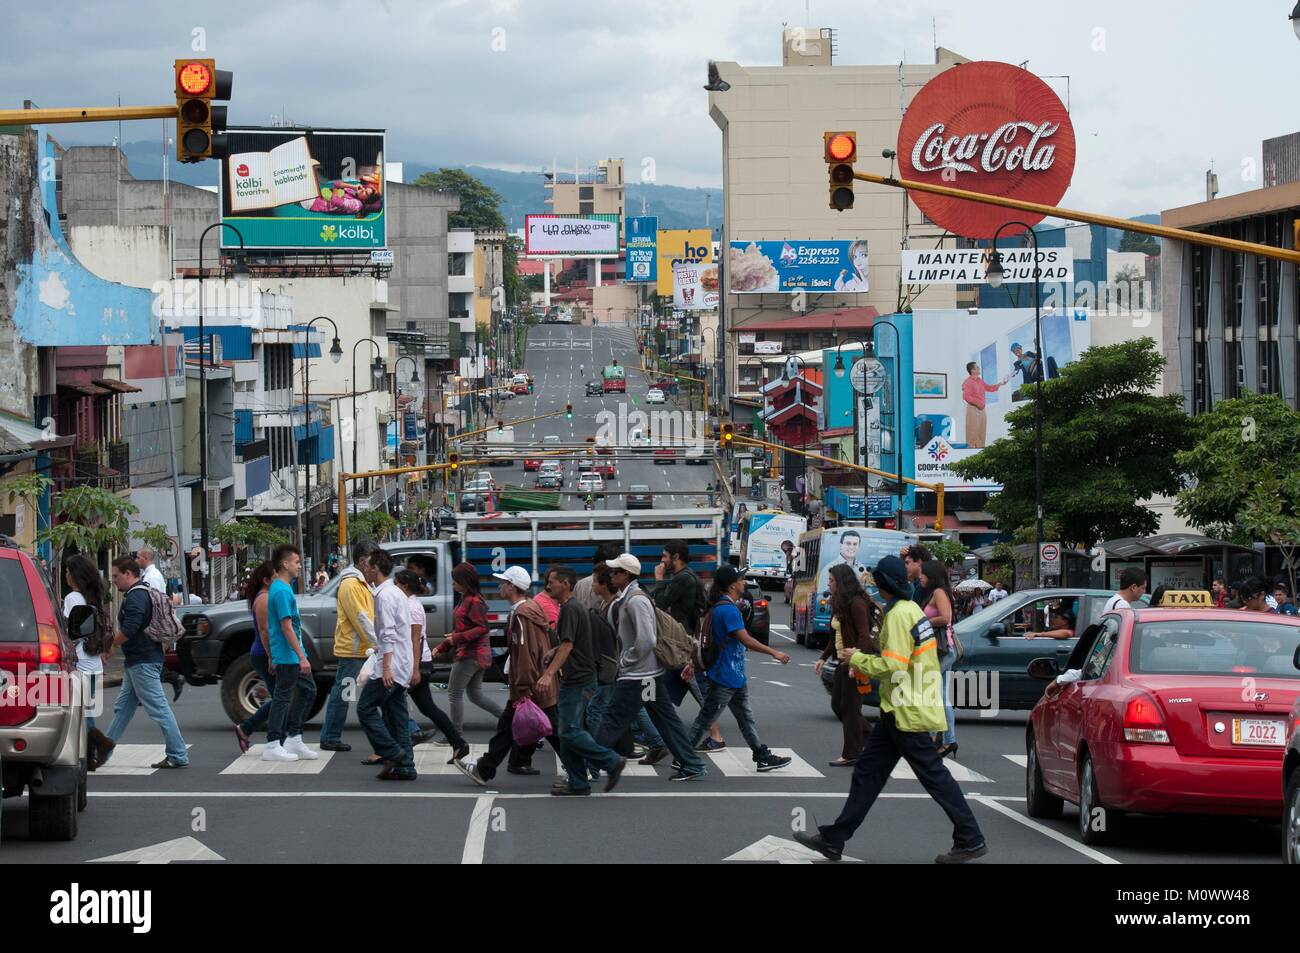 Costa Rica,San Jose Province,San Jose,pedestrians crossing a city road Stock Photo